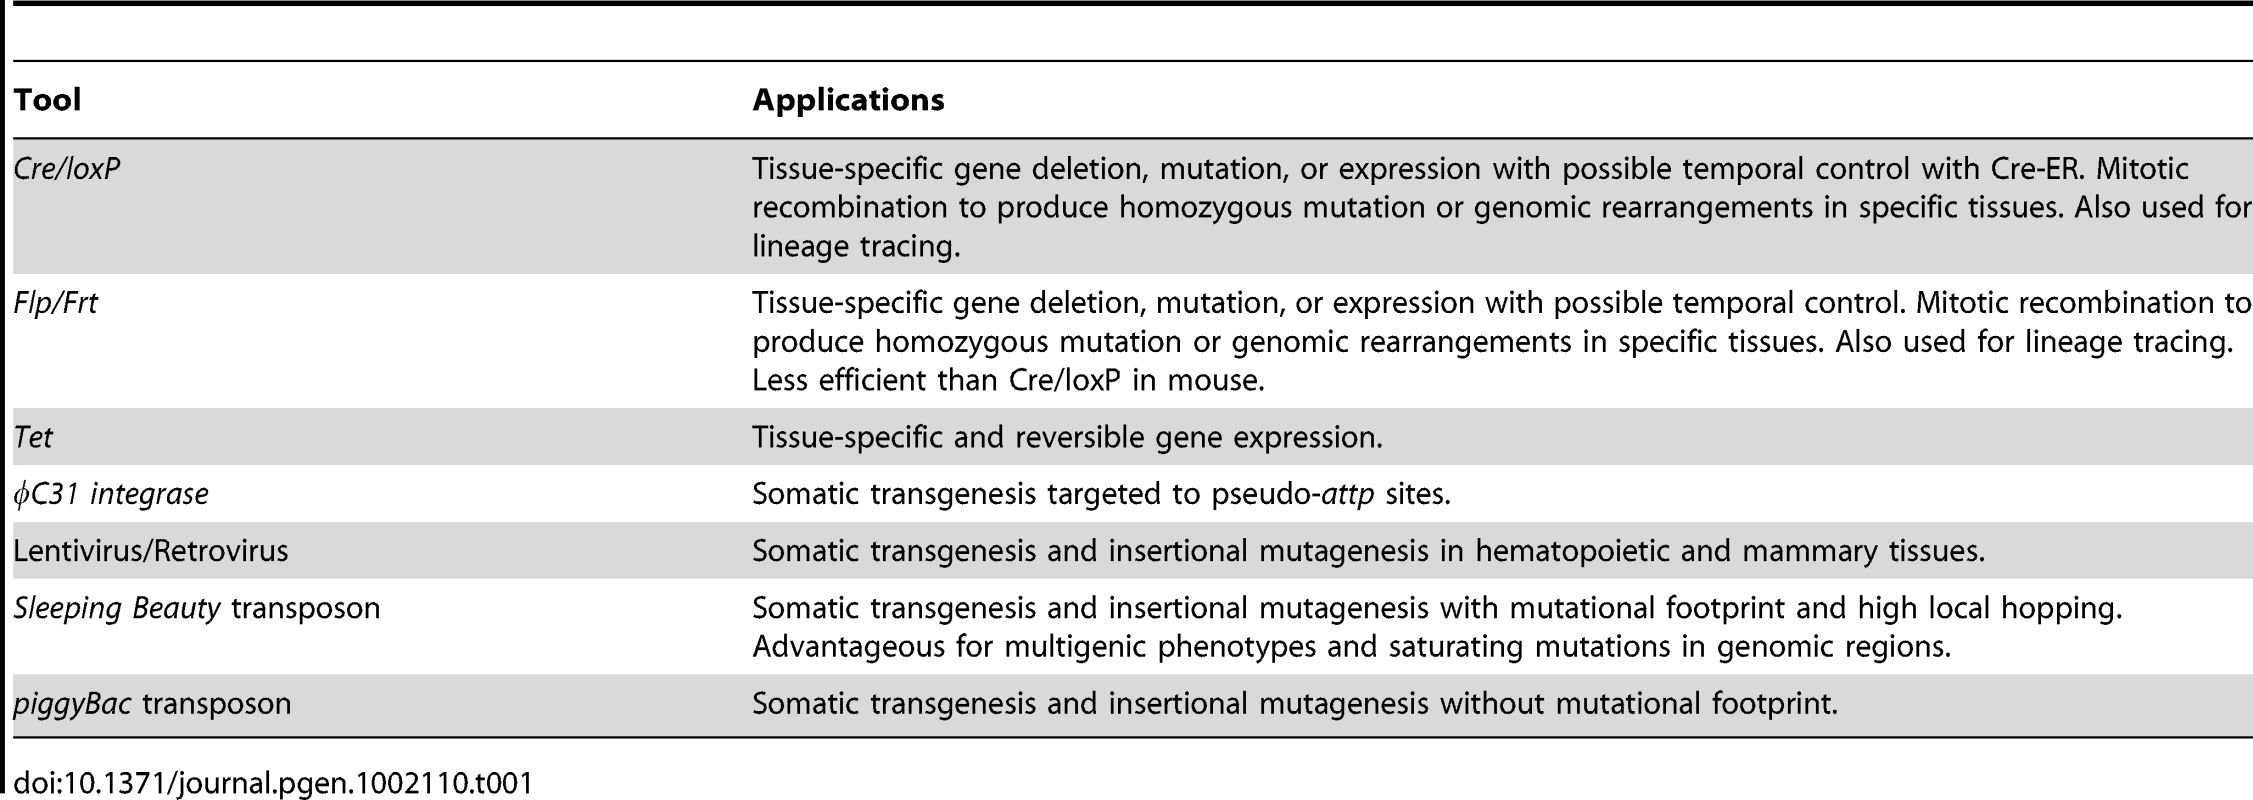 Genetic Tools for Generating Mutant Clones and Somatic Mutagenesis in Mice.